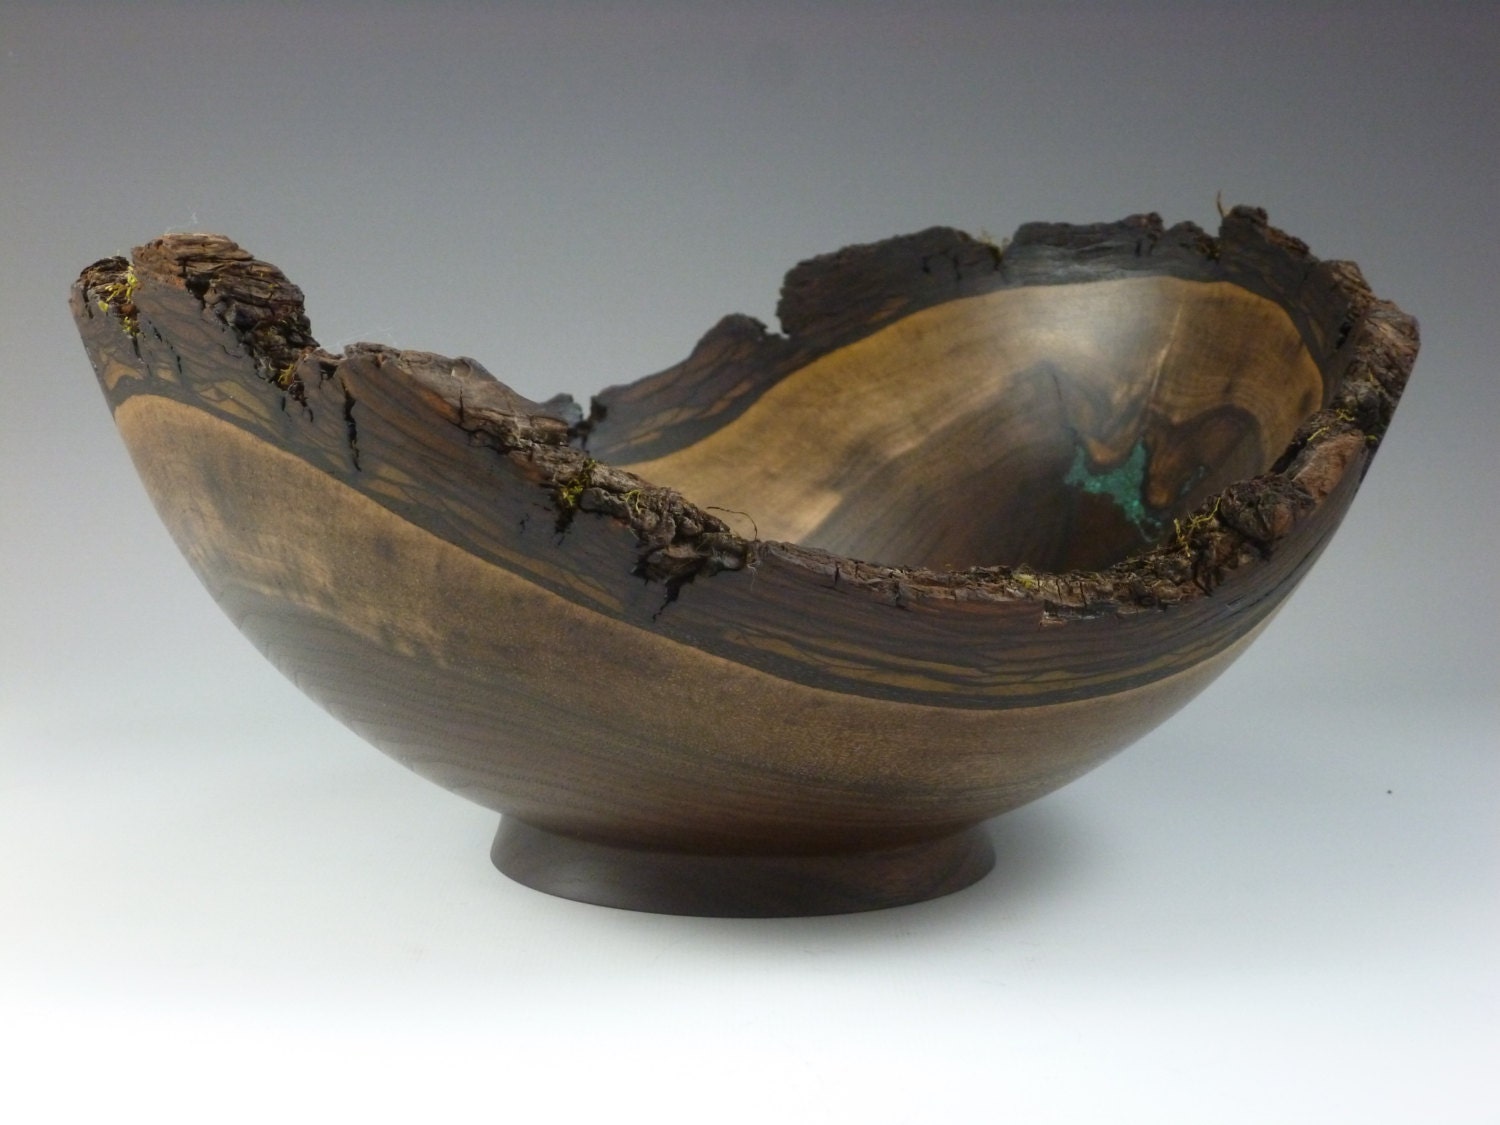 live edge wood bowl